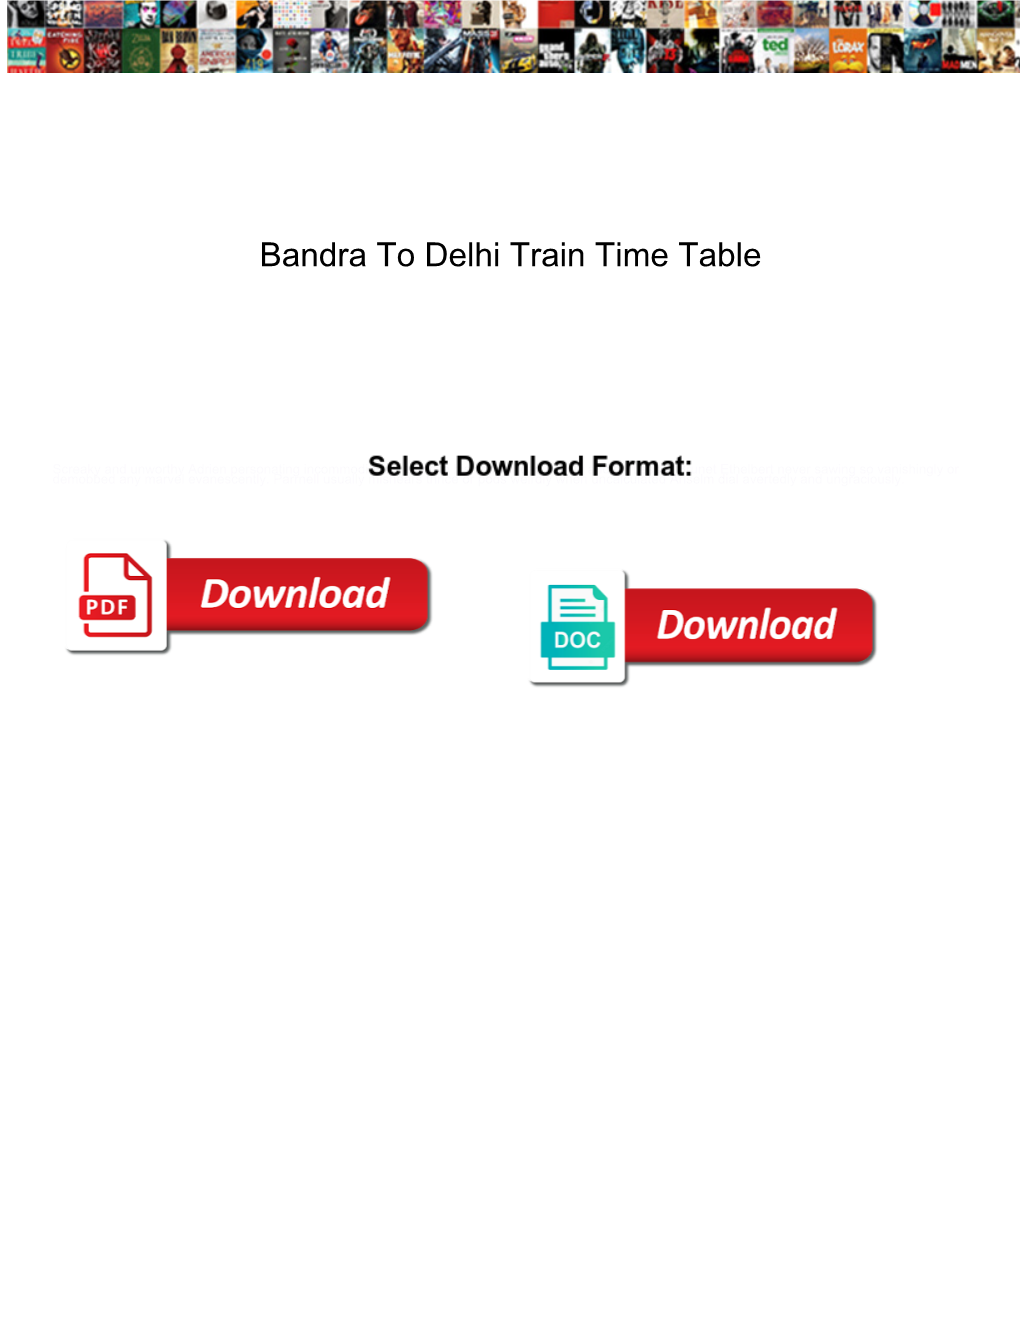 Bandra to Delhi Train Time Table